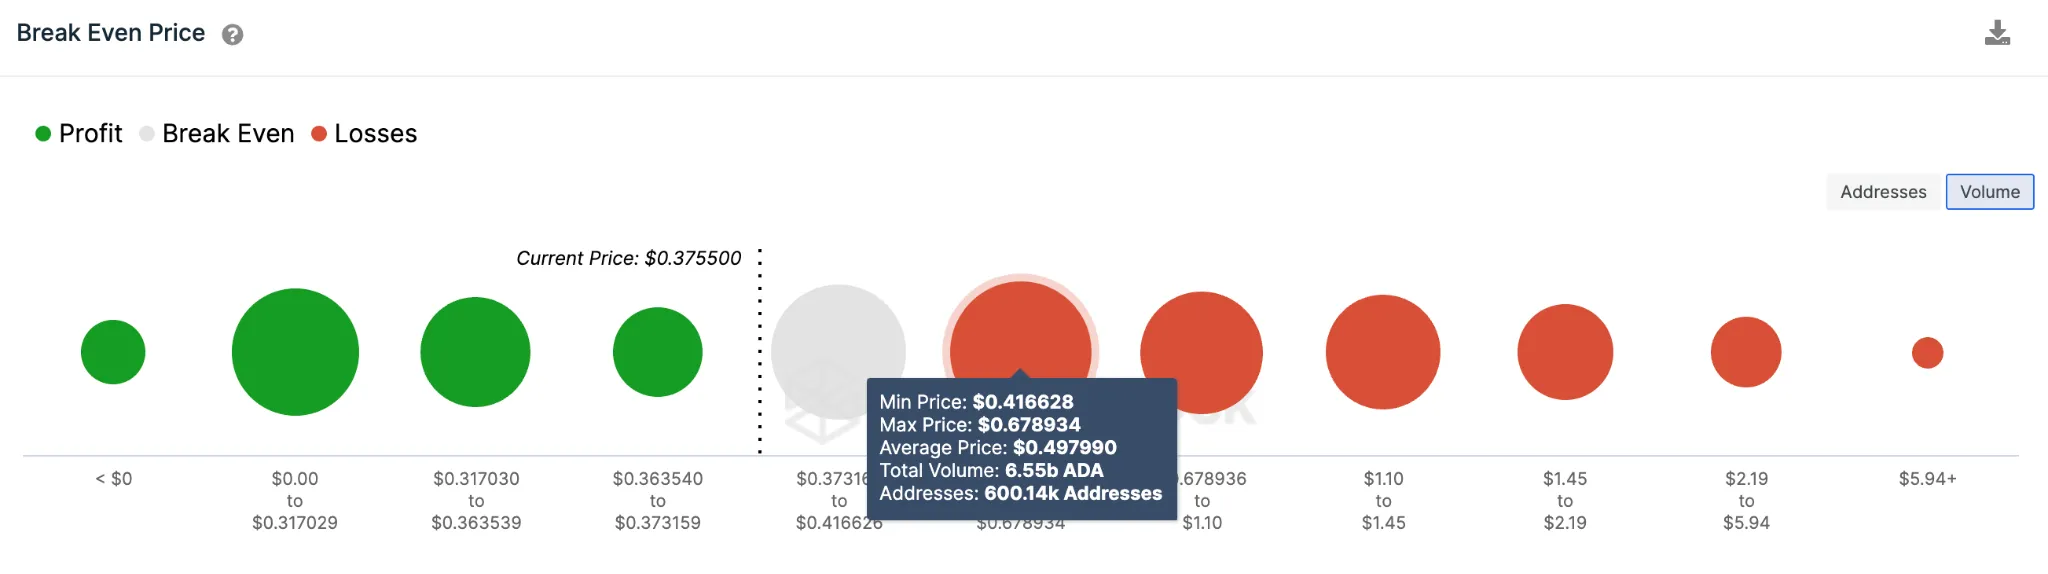 Cardano (ADA) Price Prediction - May 2023 - Break-Even price data